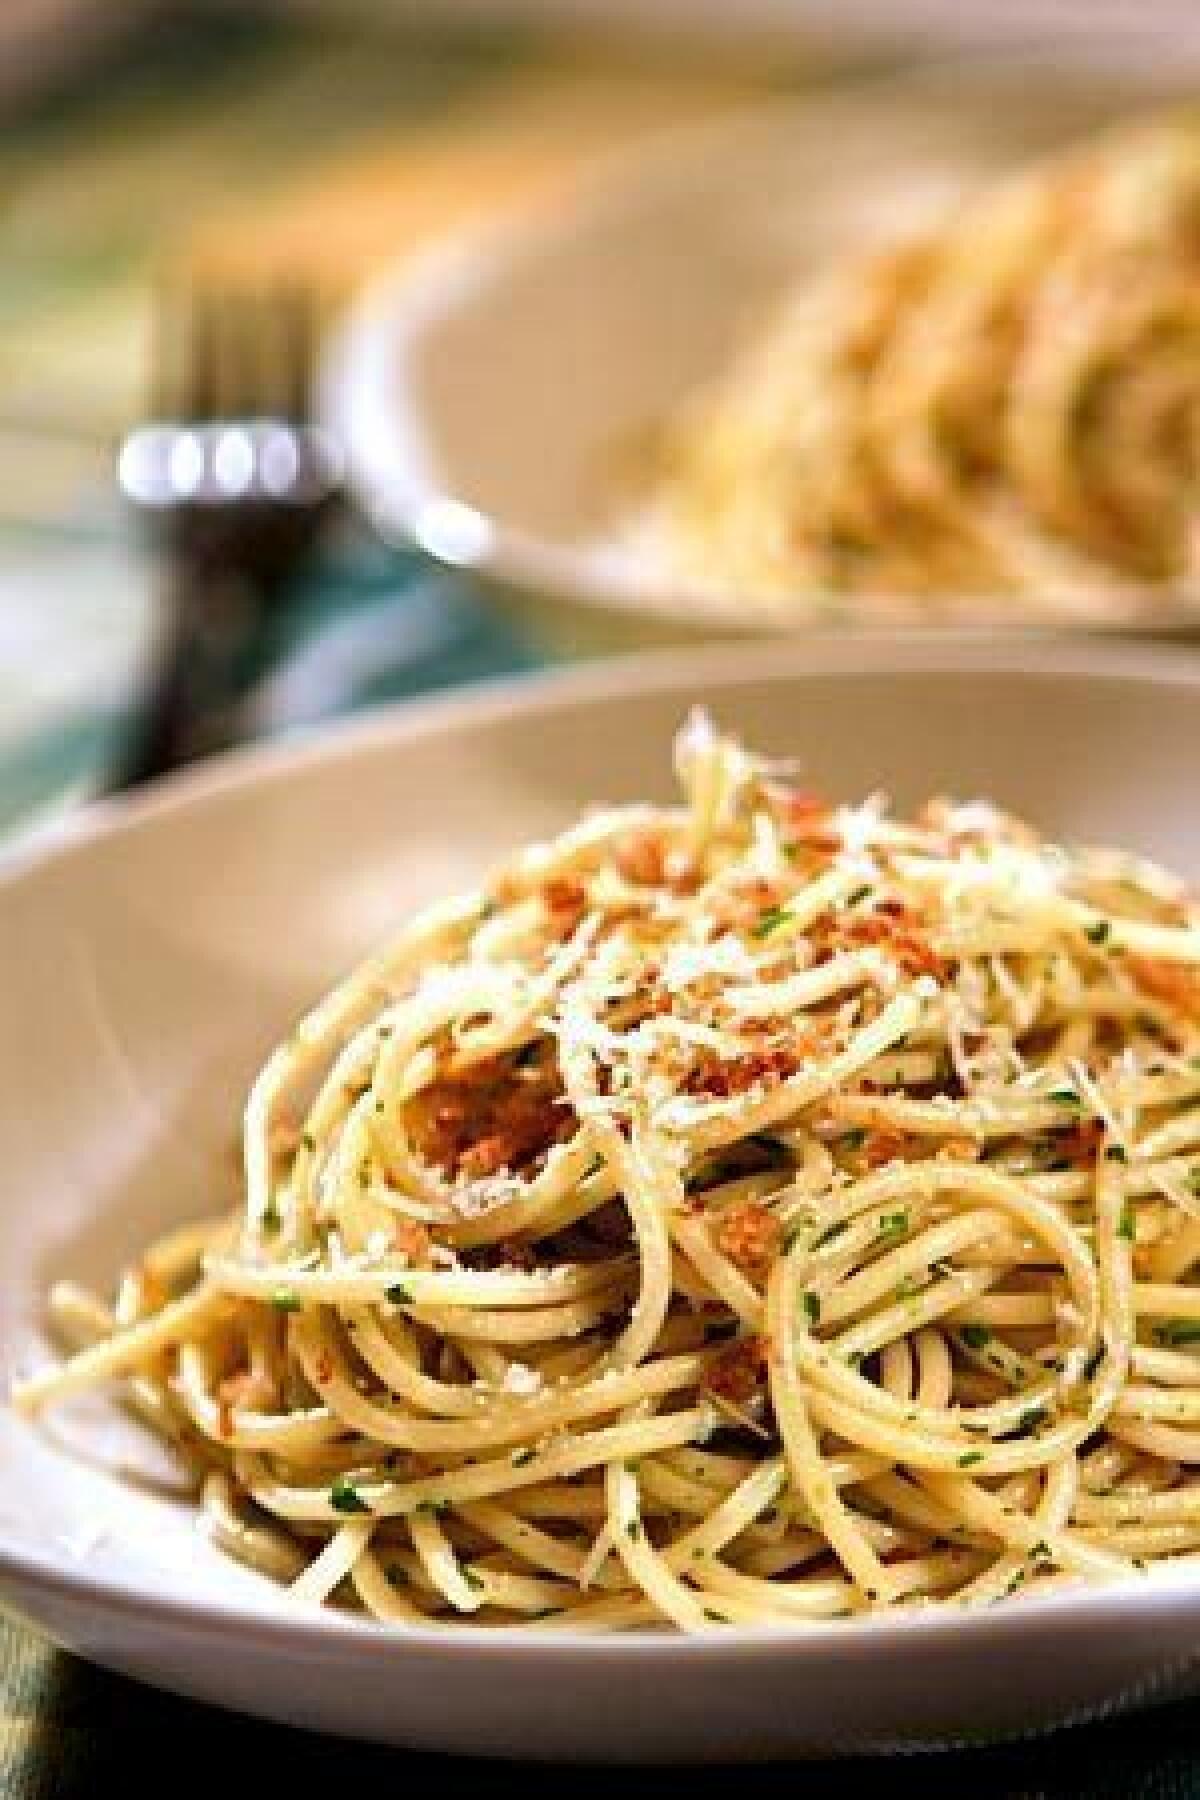 Spaghetti with arugula and garlic bread crumbs.